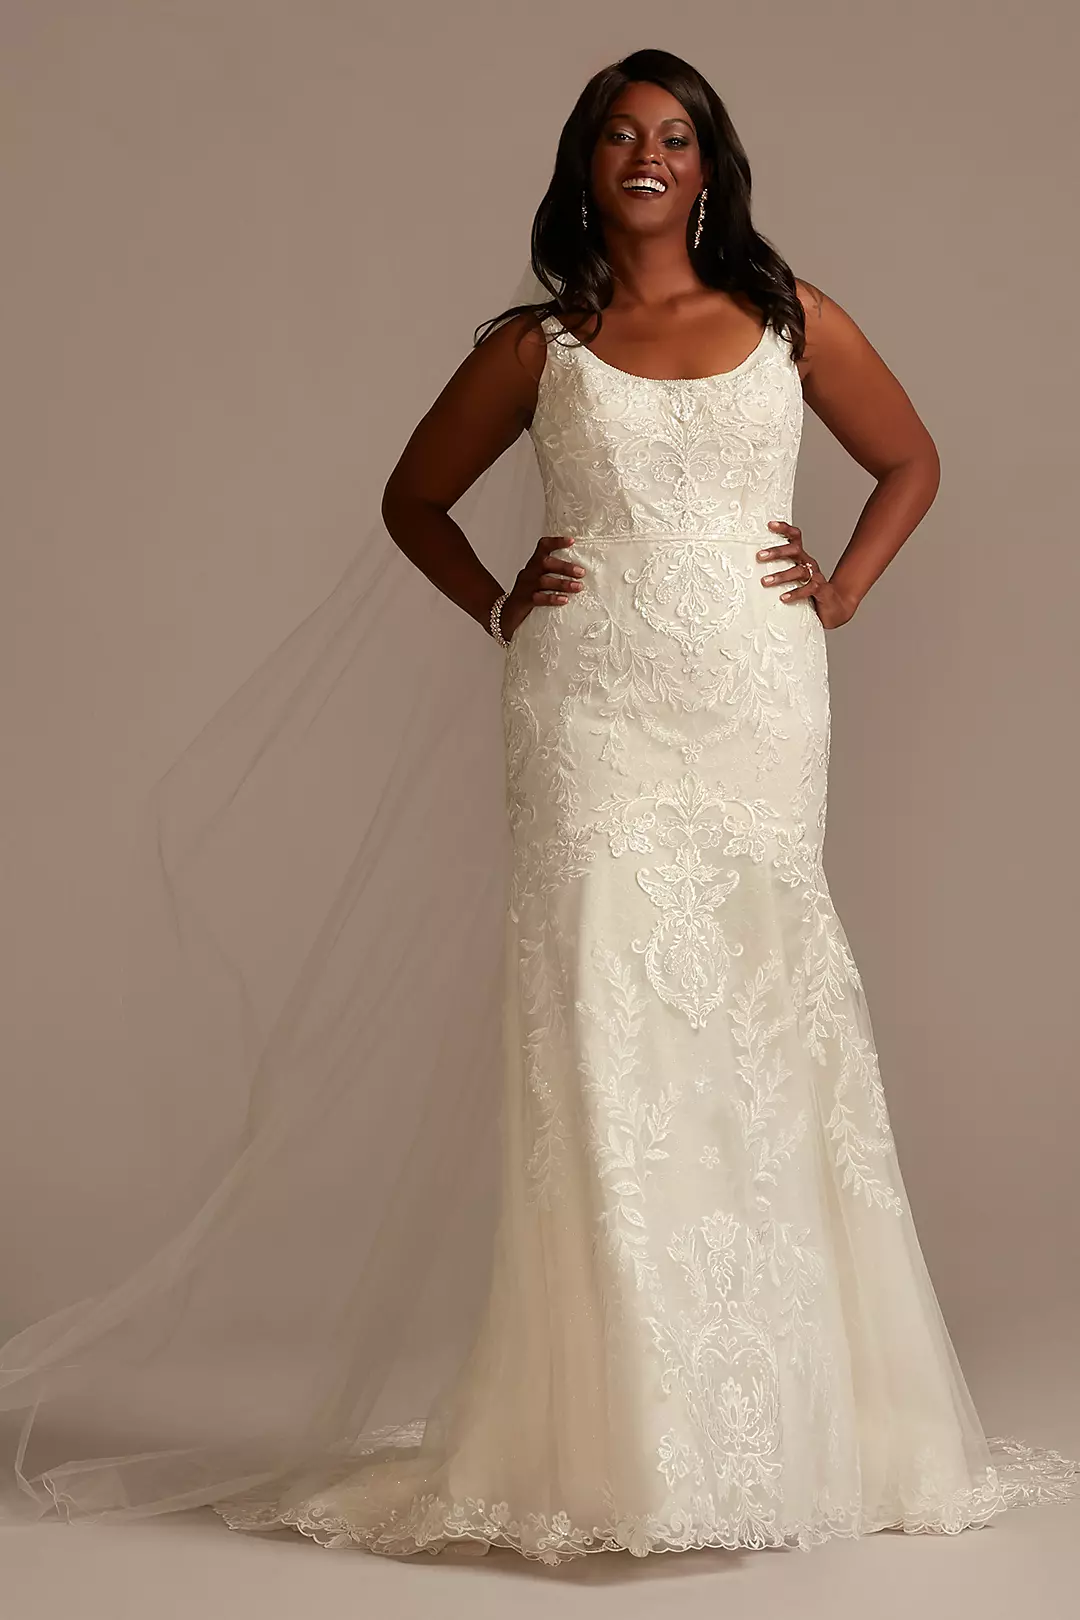 Lace Wedding Dress with Cutout Train Image